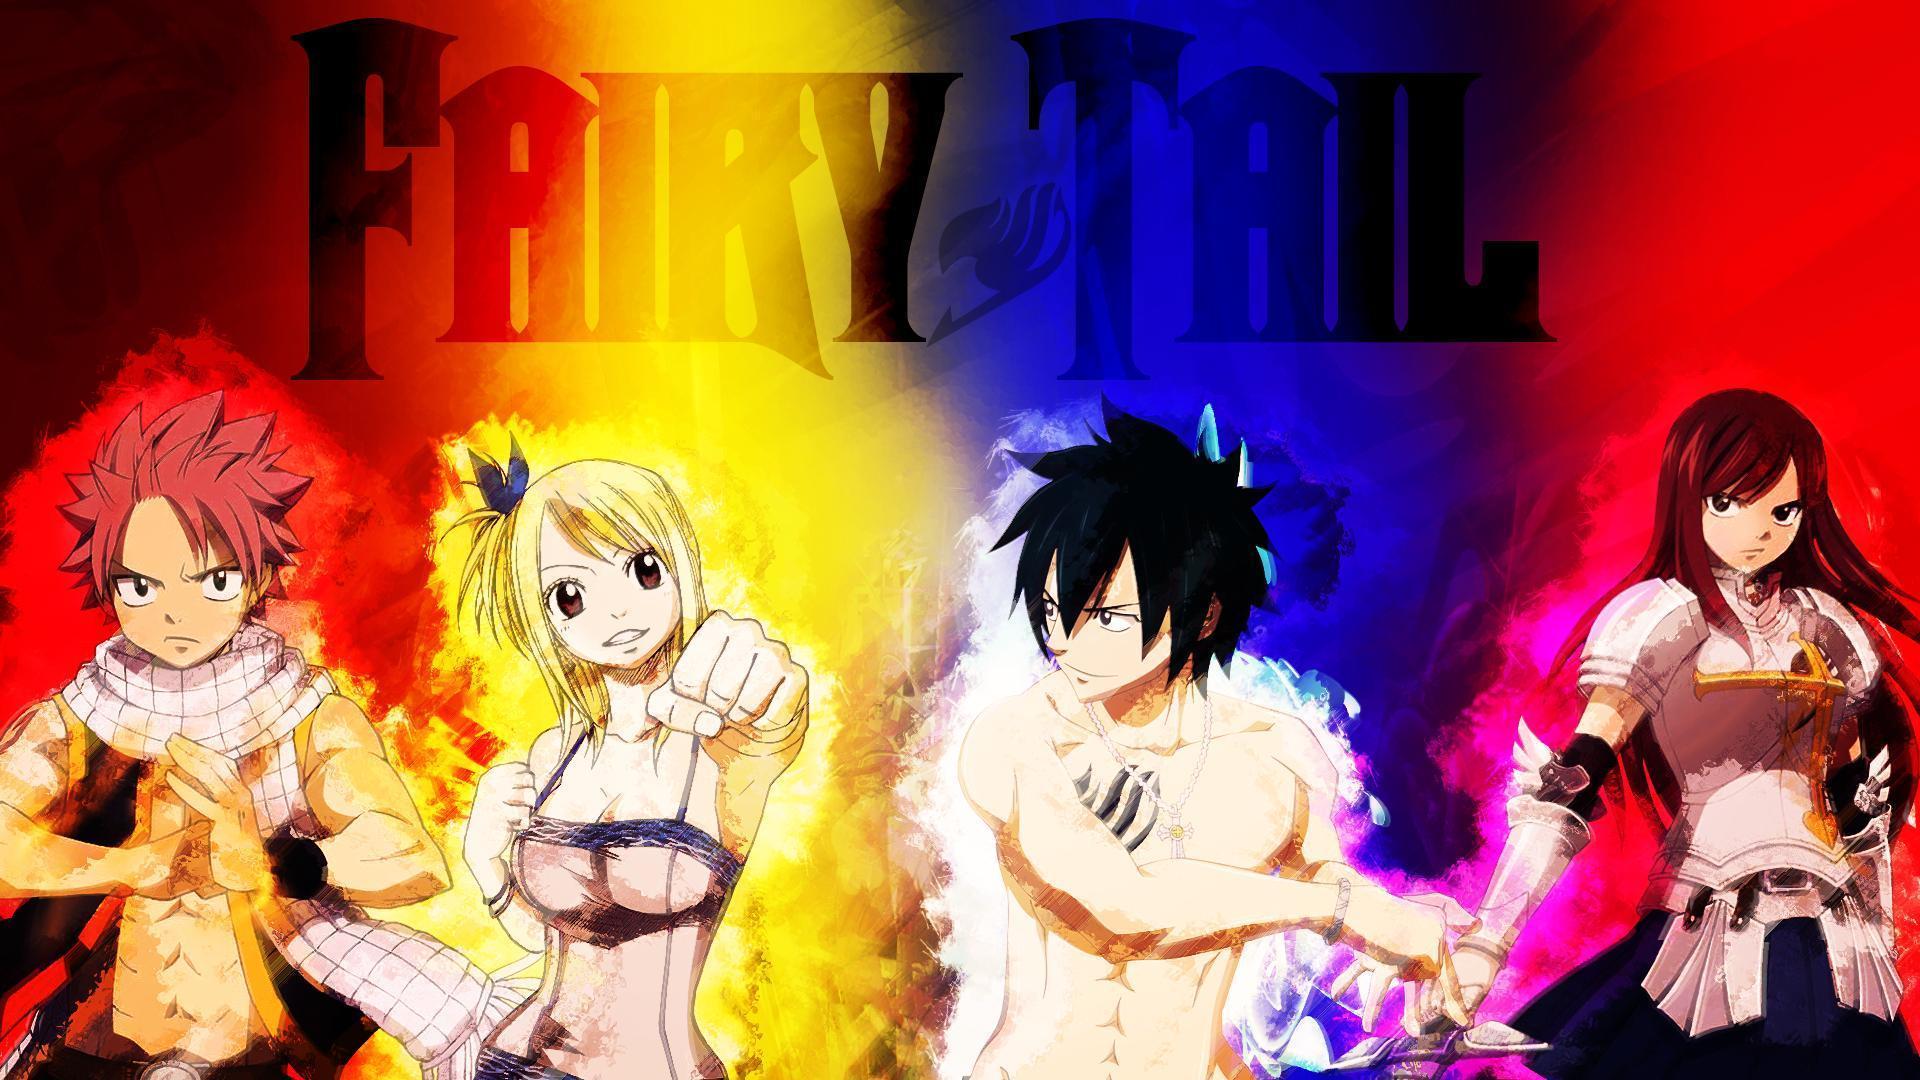 Anime Fairy Tail Wallpaper. Wallpaper, Background, Image, Art